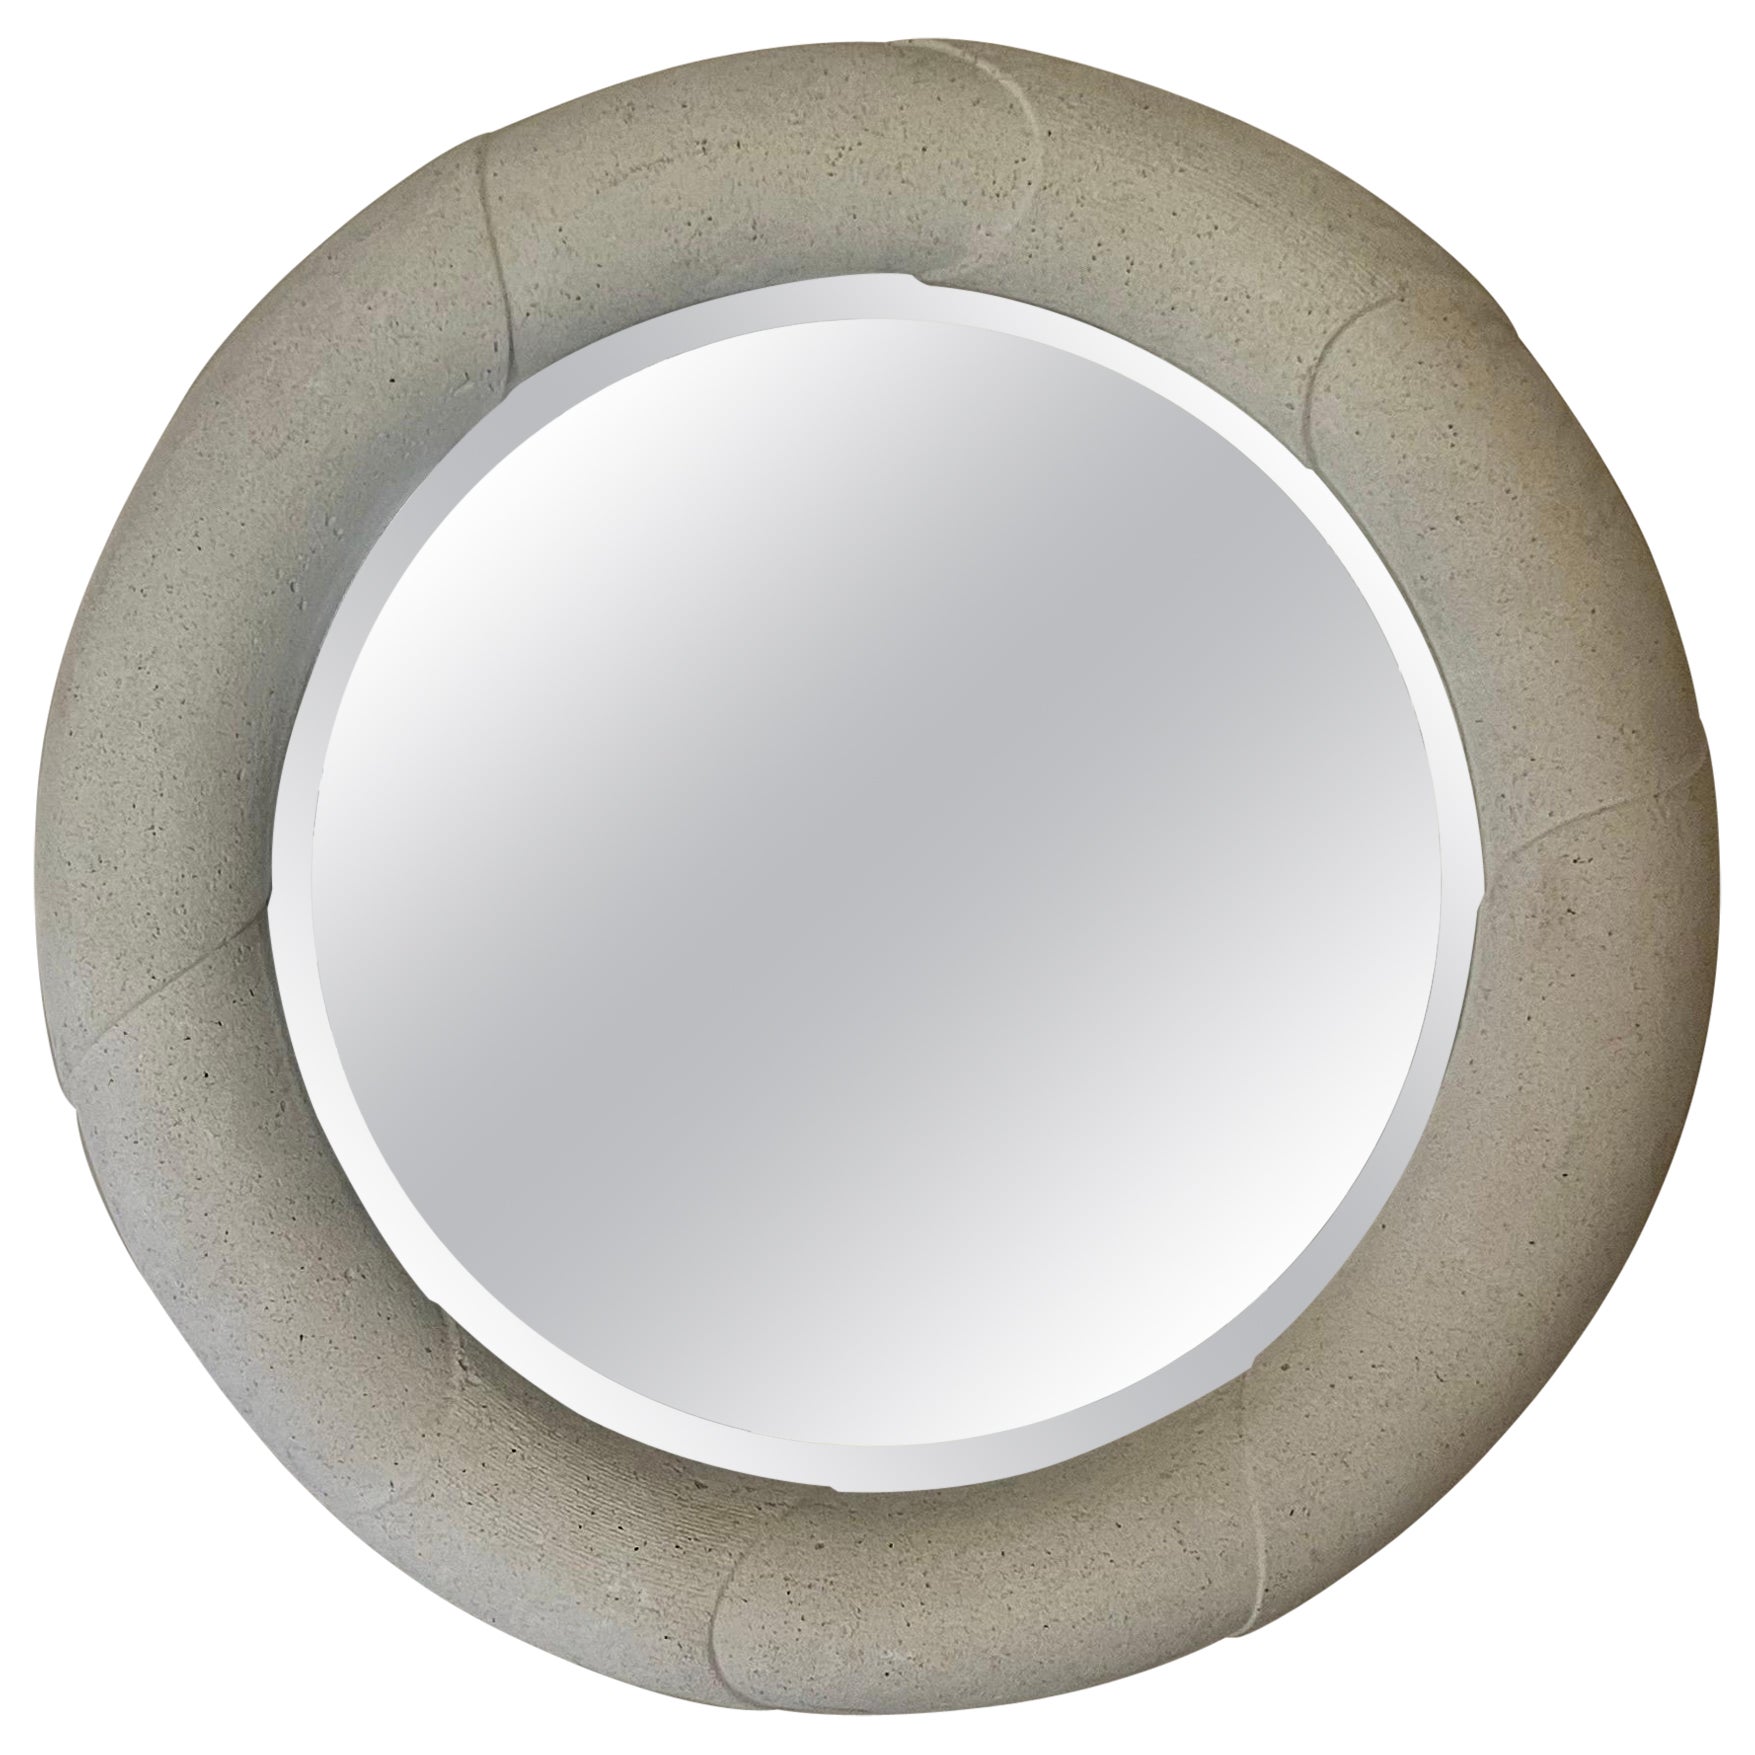 Karl Springer Style Round Plaster Mirror For Sale